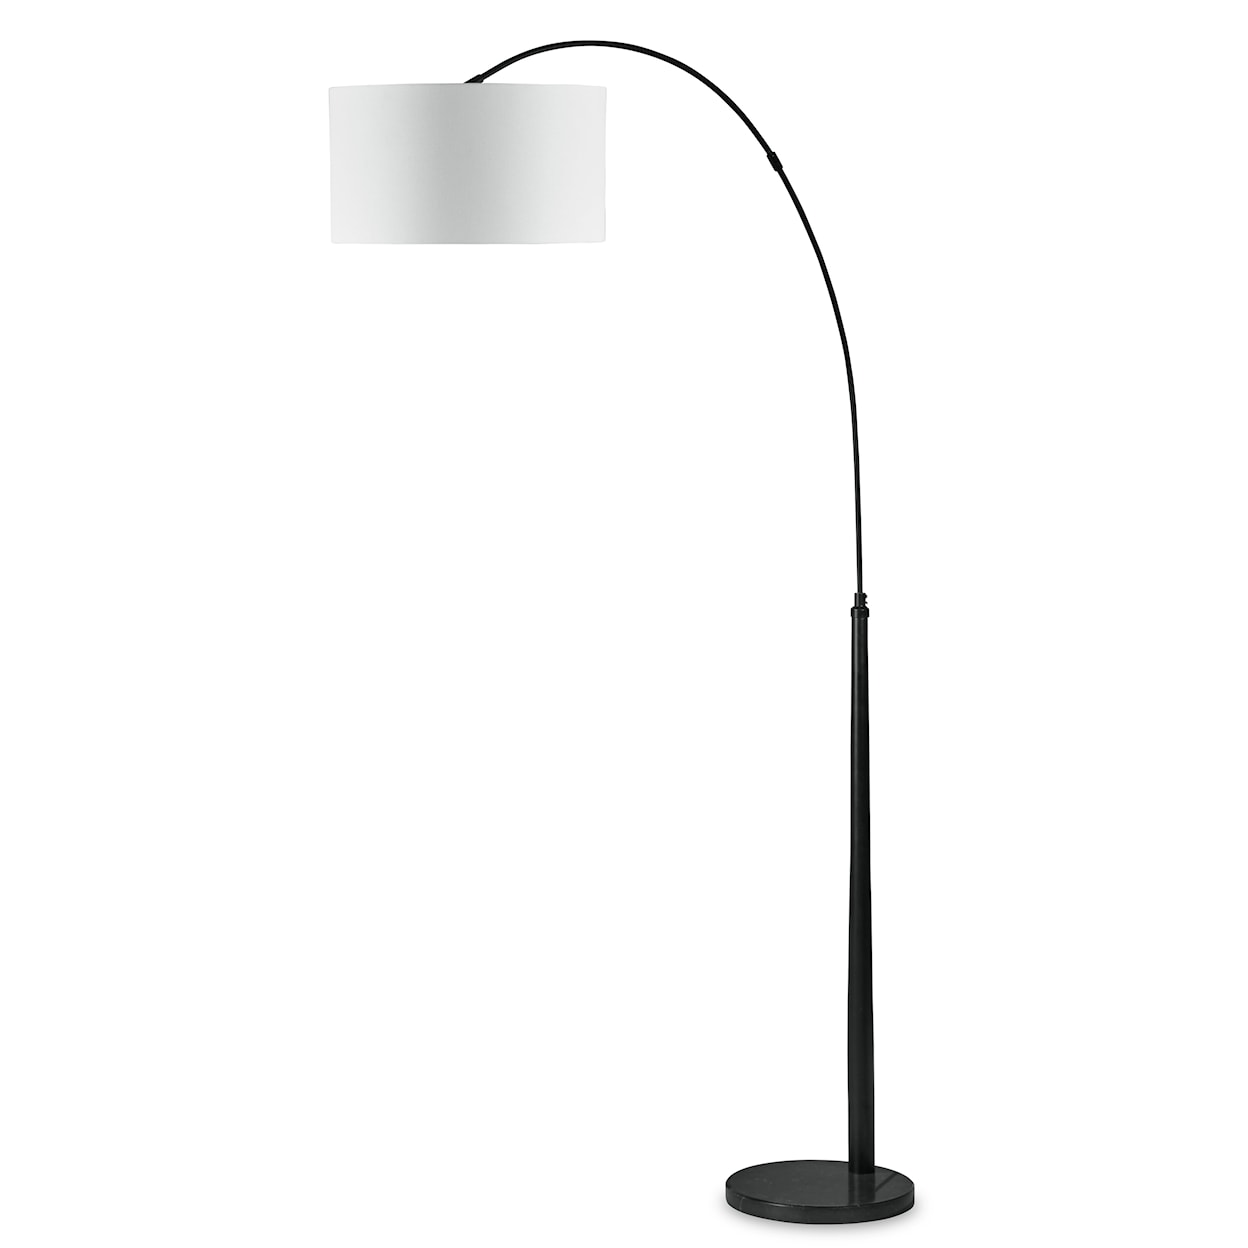 Ashley Furniture Signature Design Lamps - Contemporary Veergate Arc Lamp